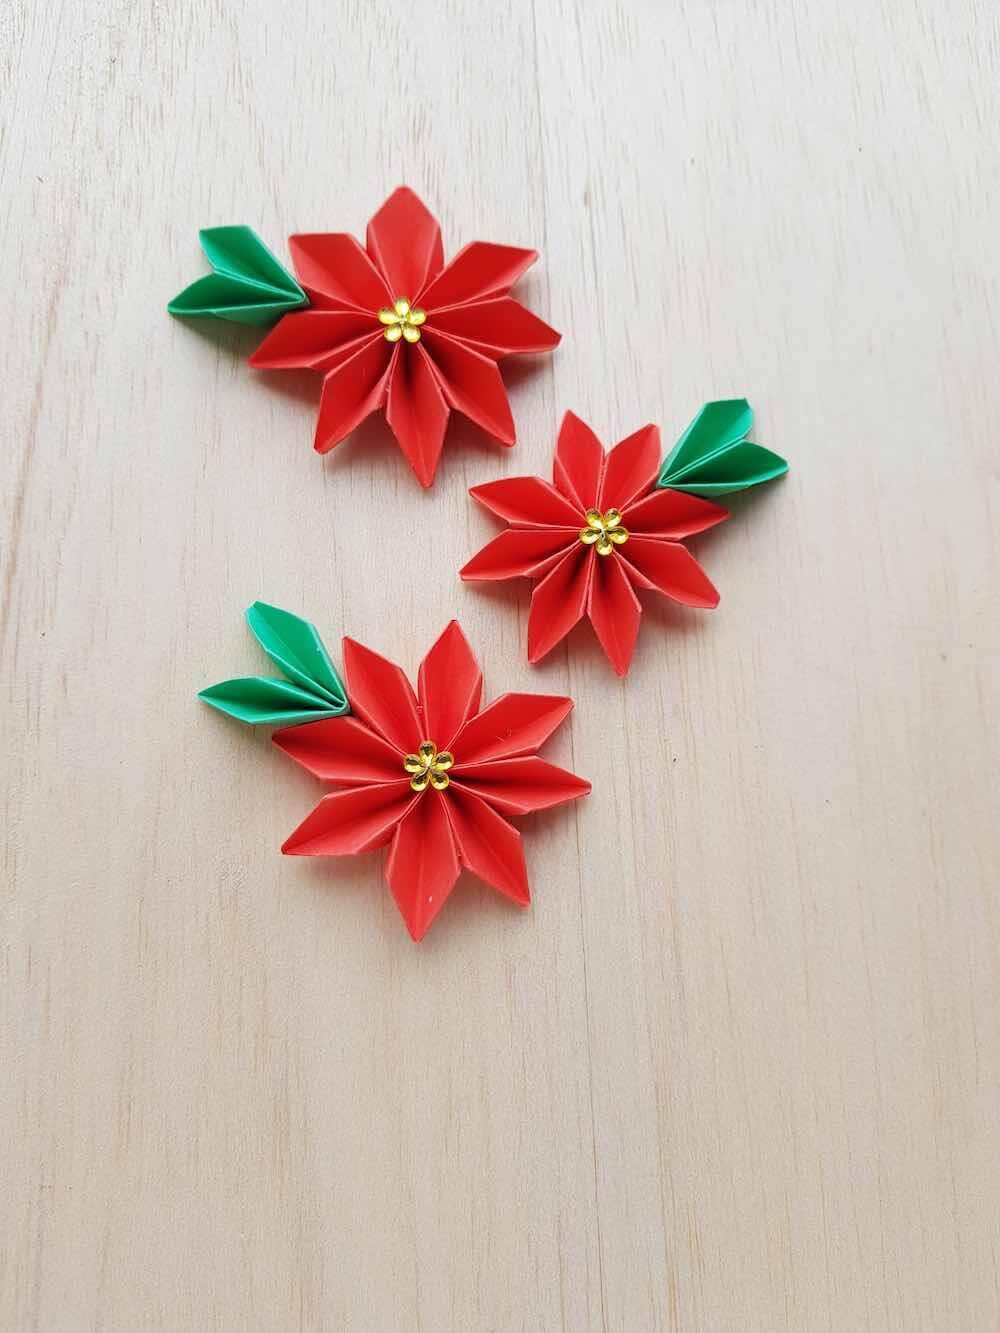 Easy To Make Origami Poinsettia Flower Craft For Kids : Poinsettia Flower Making Ideas for Christmas